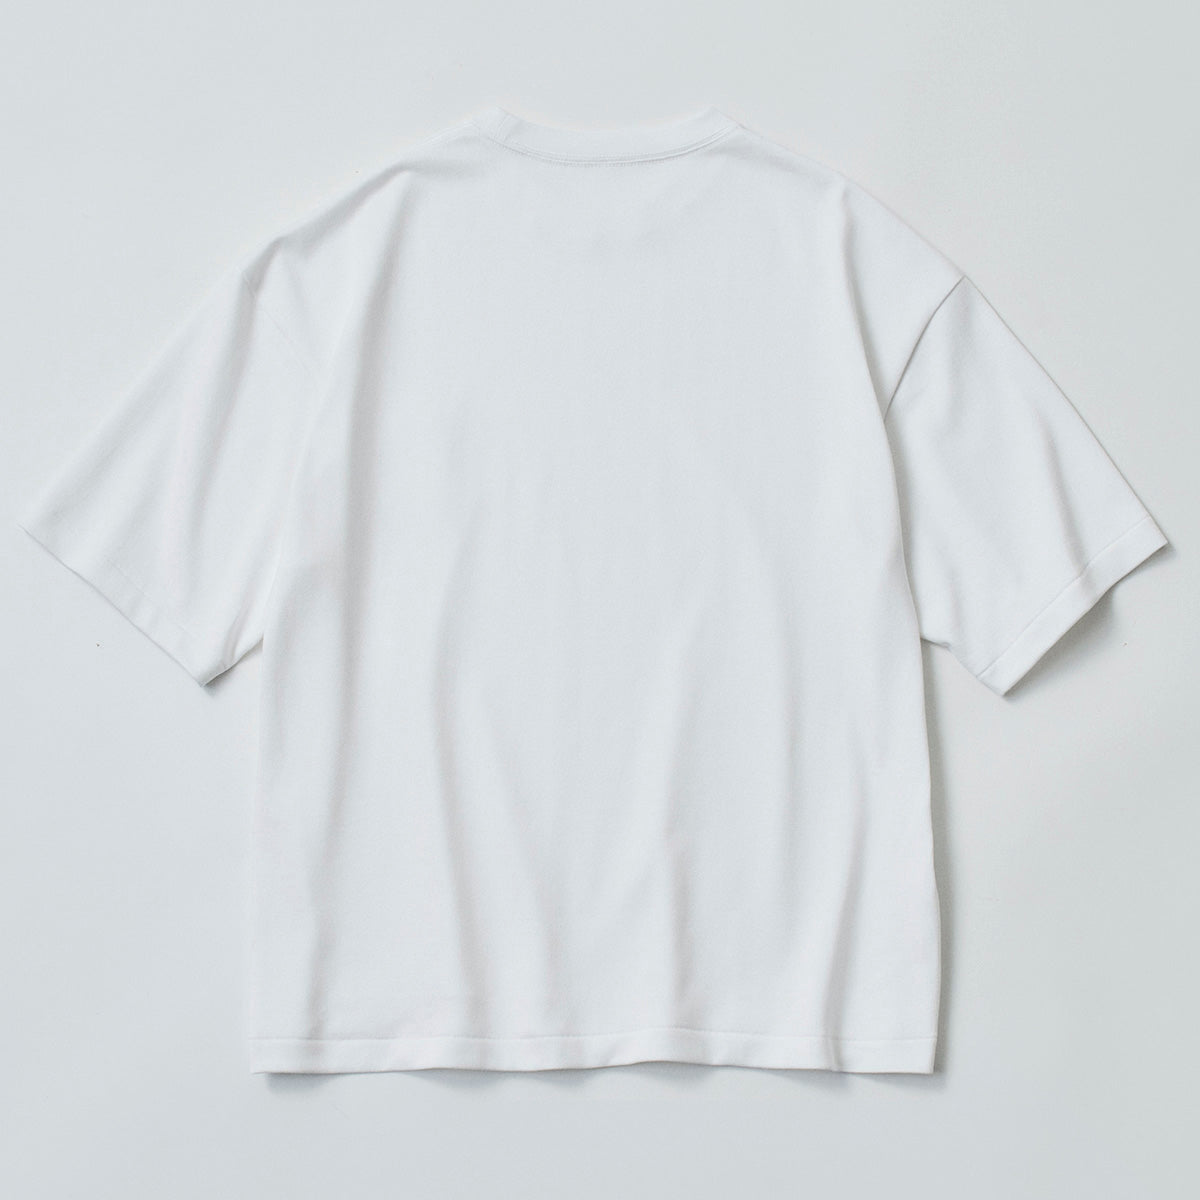 American Sea Island Cotton Pocket T-shirt